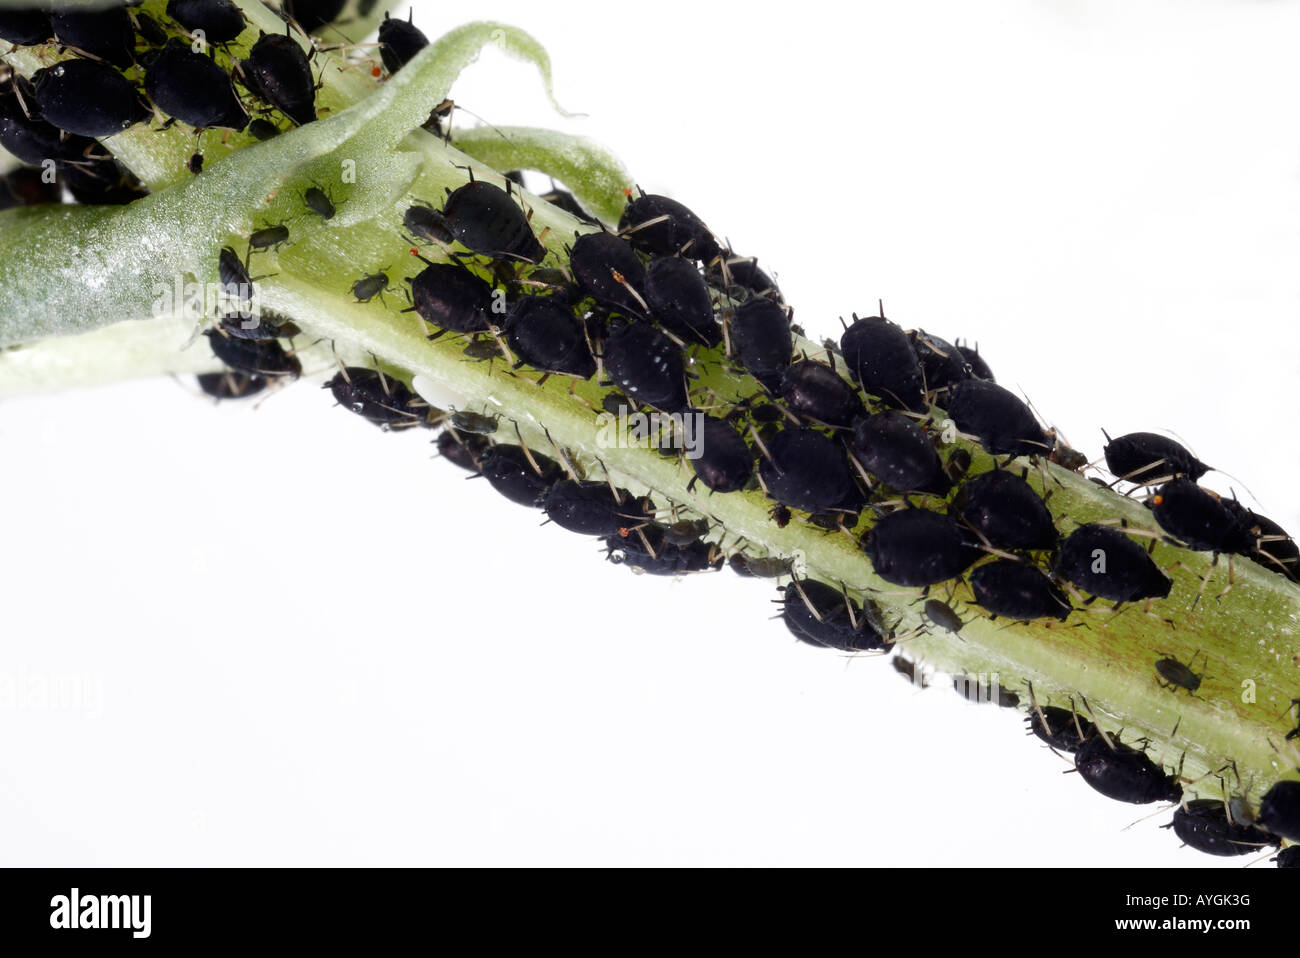 Black aphids on fava bean plant Stock Photo